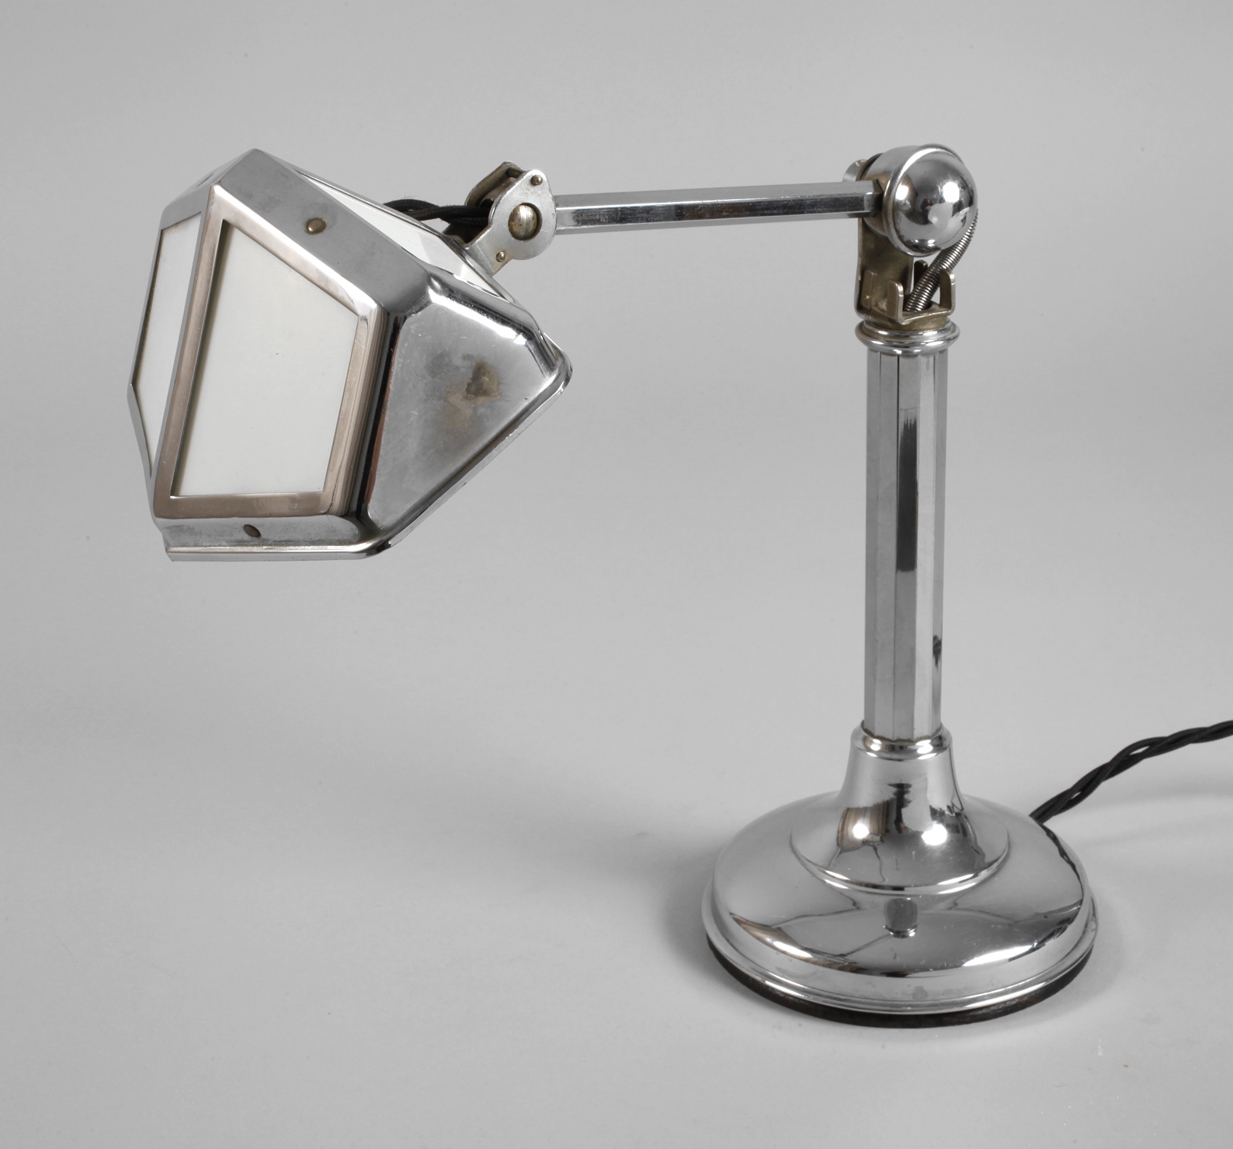 Pirouette table lamp "Nizza"